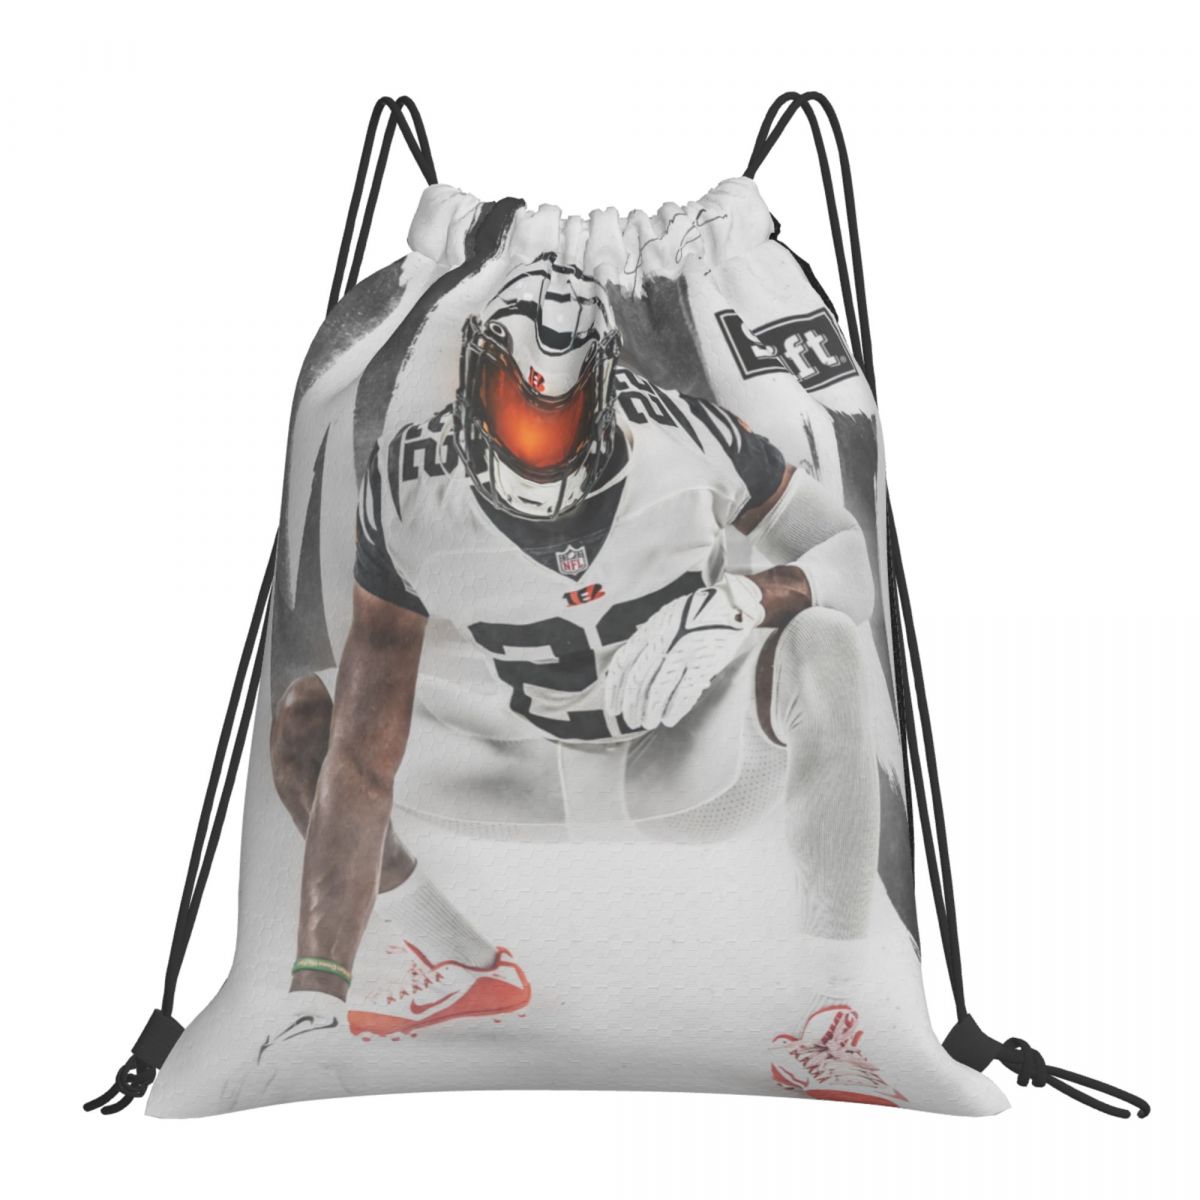 Cincinnati Bengals Chidobe Awuzie Drawstring Backpack Sports Gym Bag